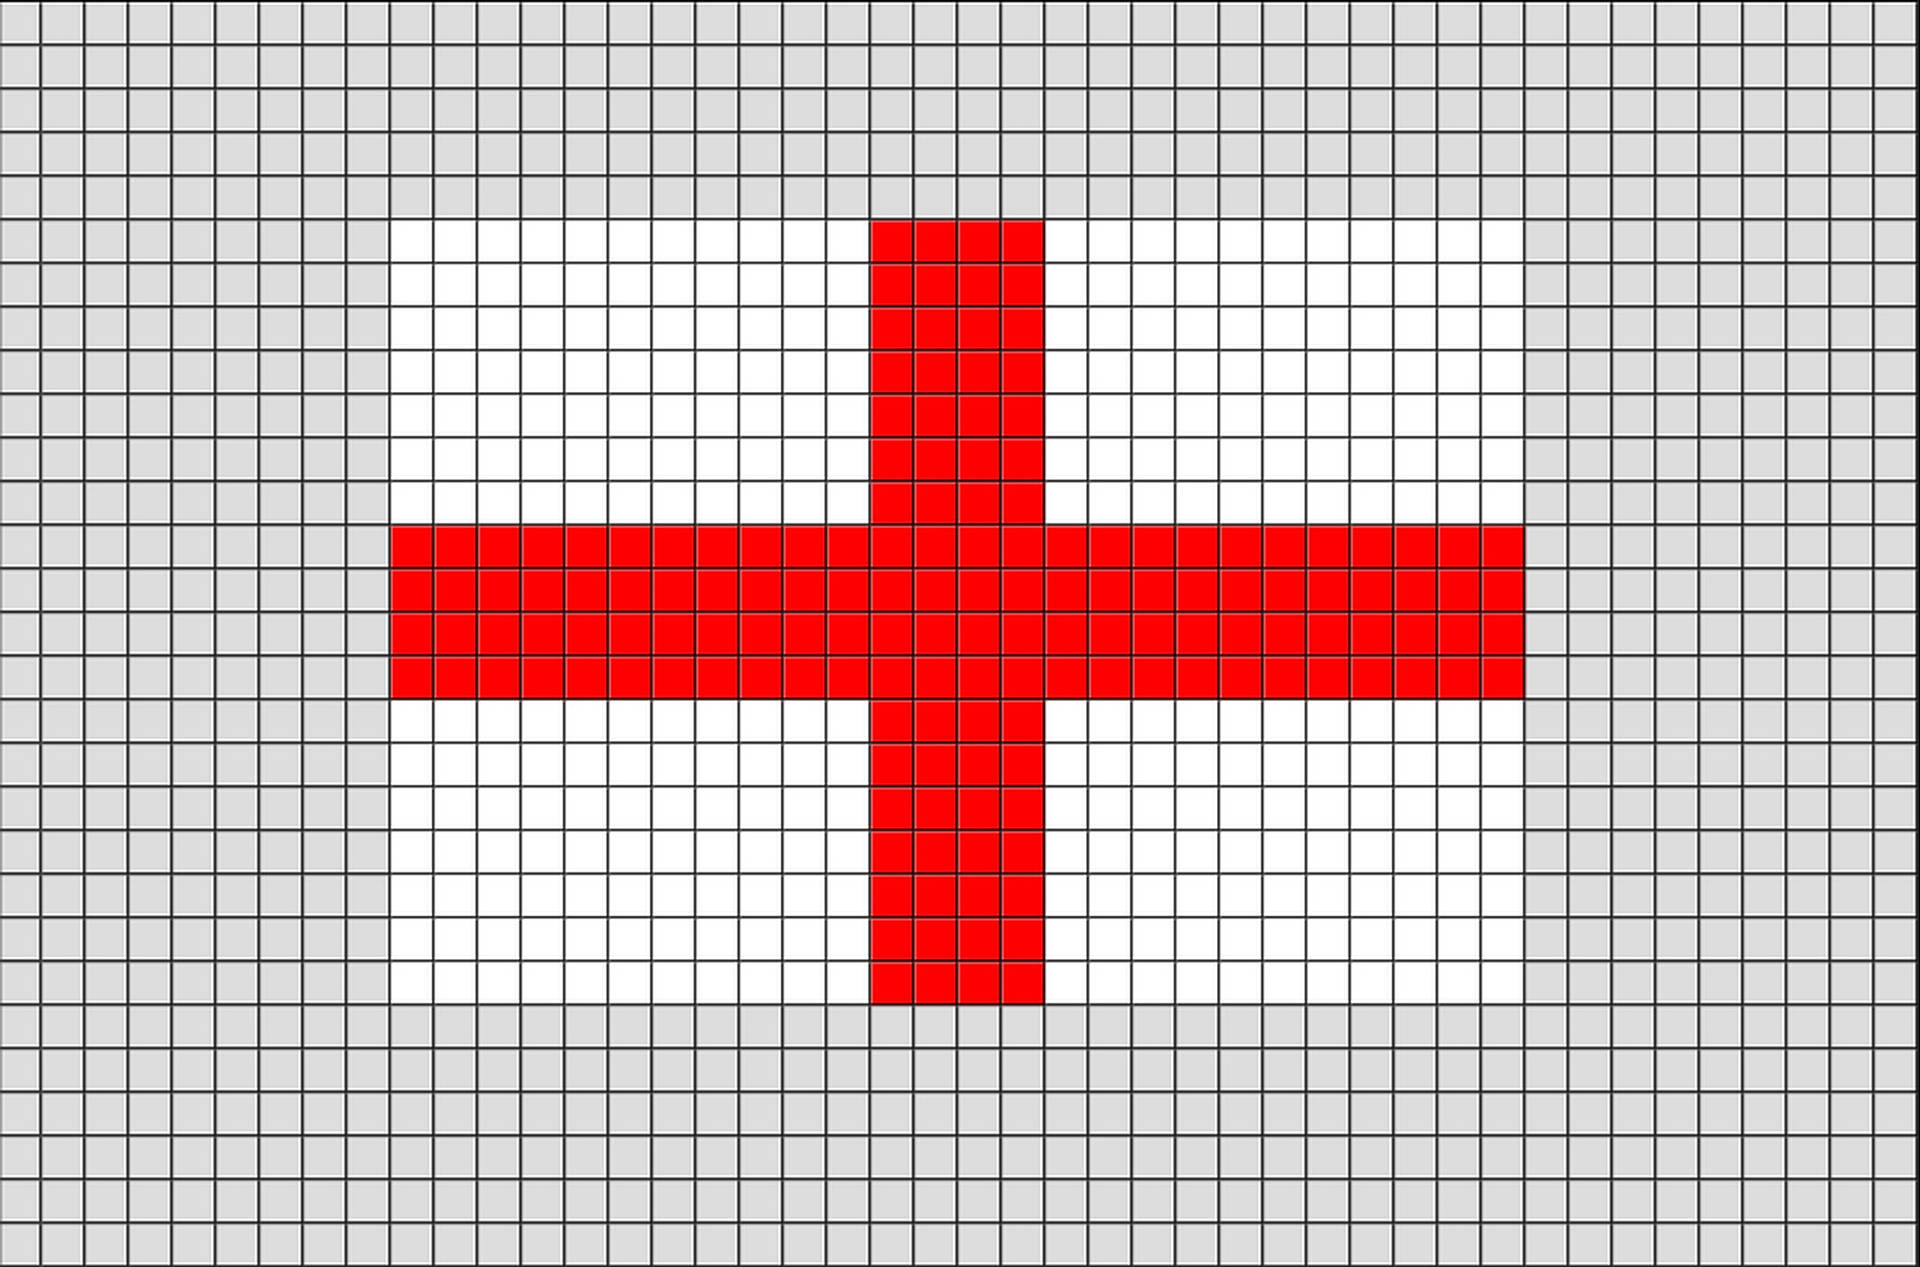 Engelskaflaggan I Pixel Art. Wallpaper